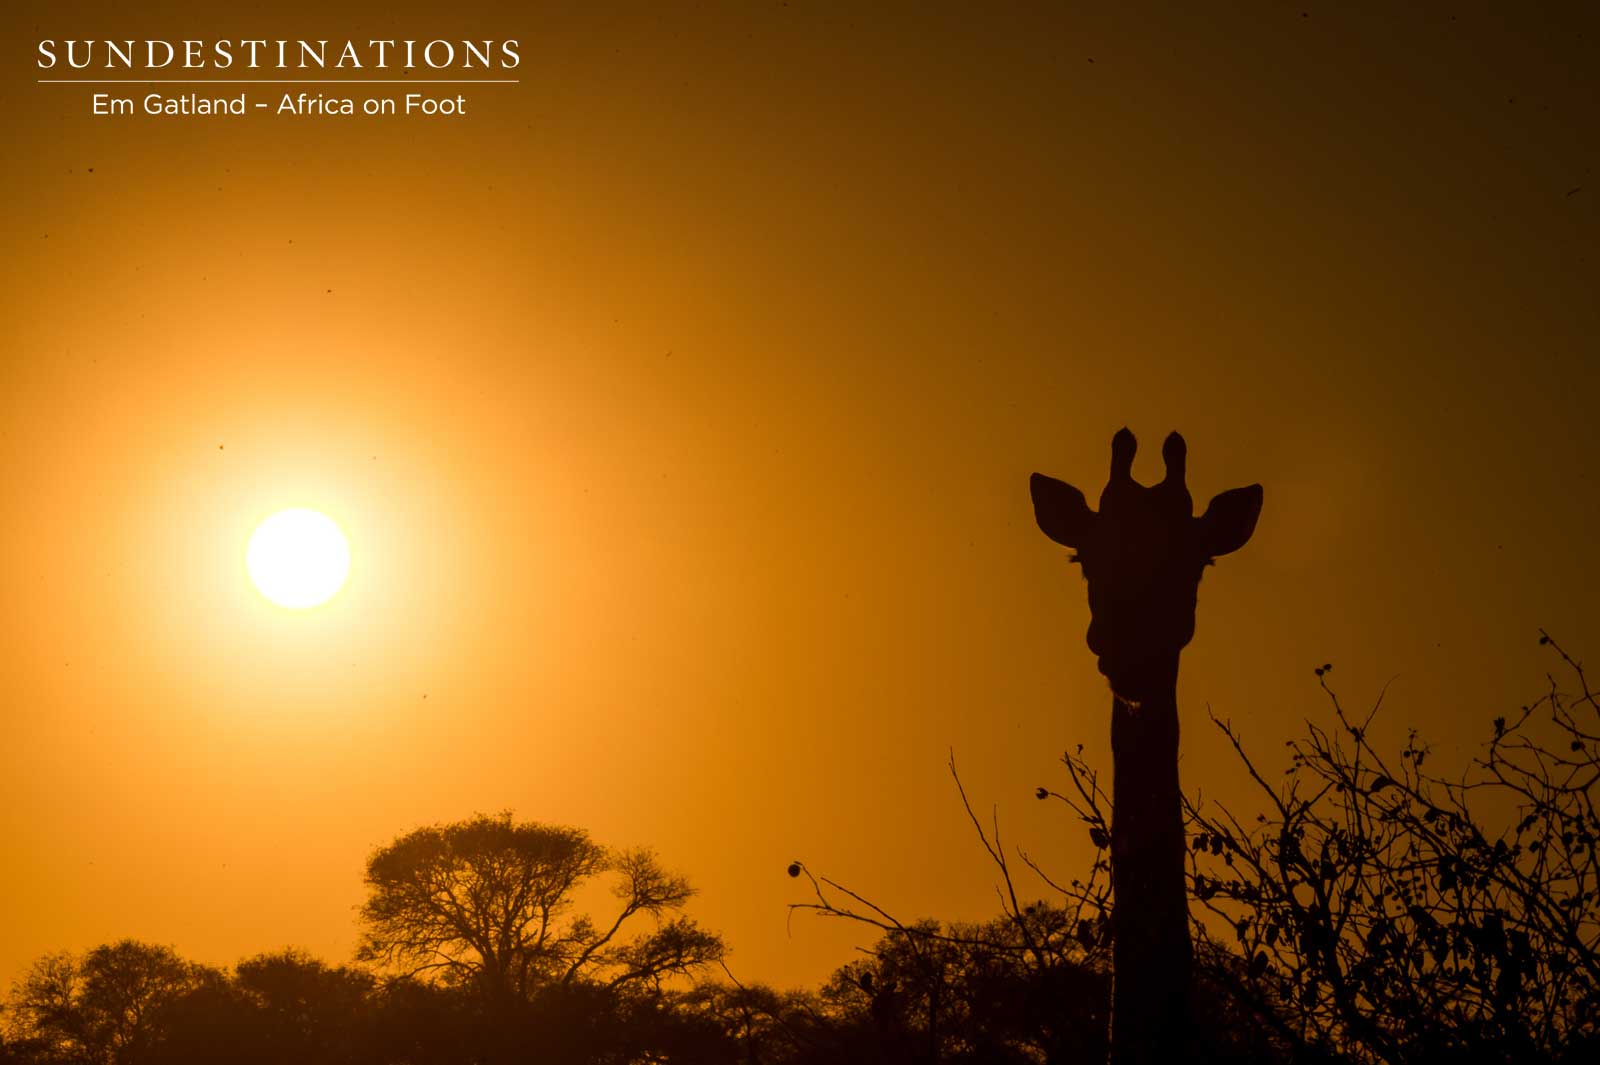 Giraffe in the Sunset